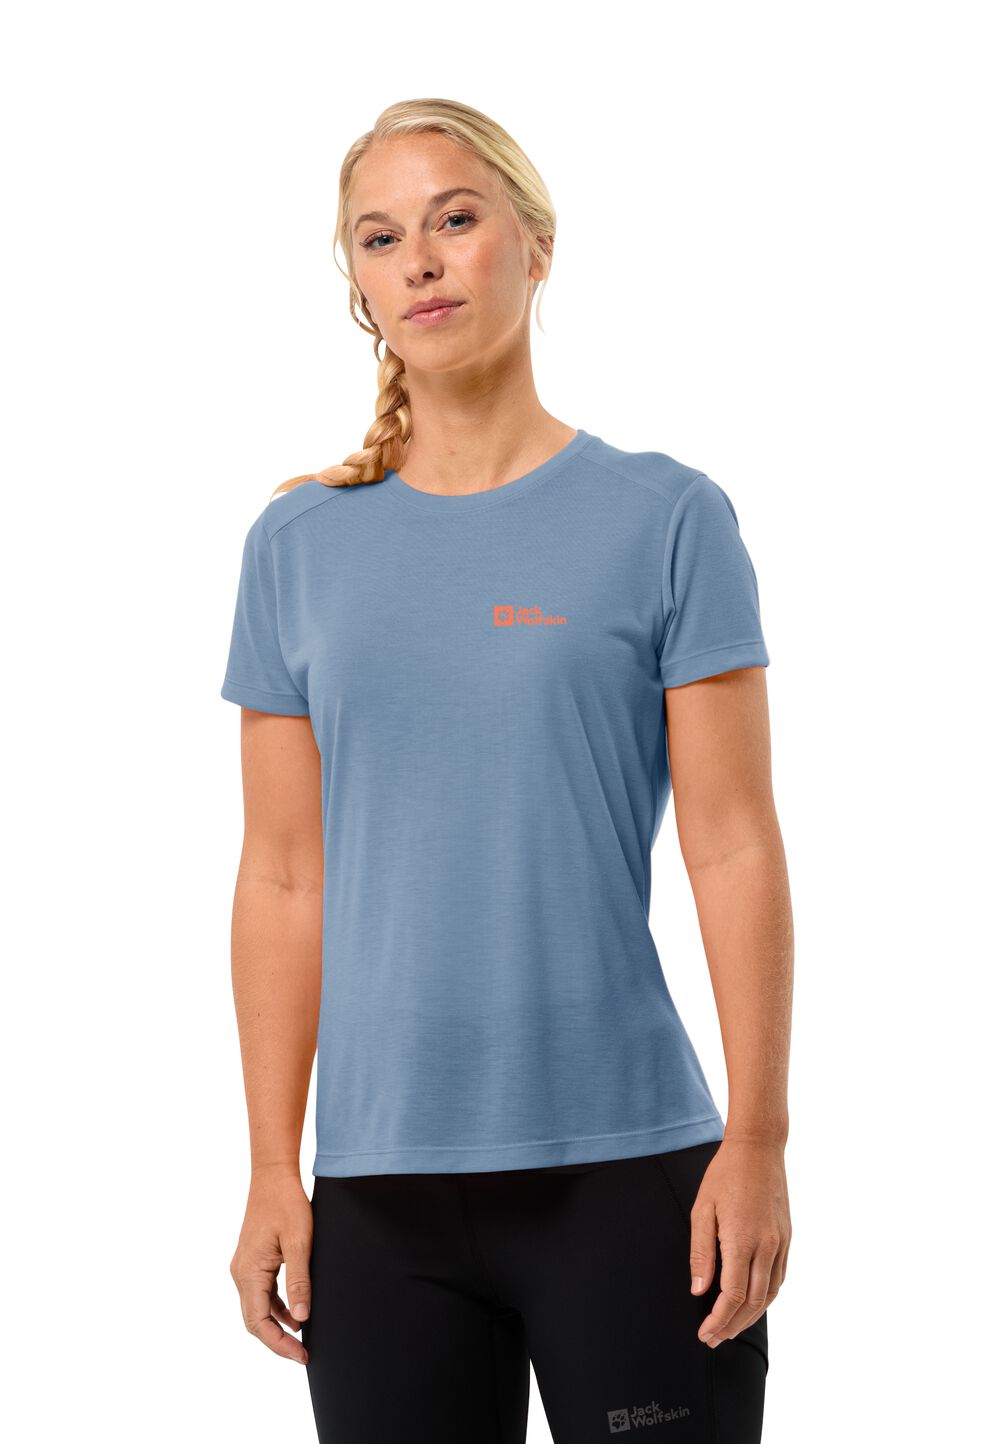 Jack Wolfskin Vonnan S S T-Shirt Women Functioneel shirt Dames XS elemental blue elemental blue